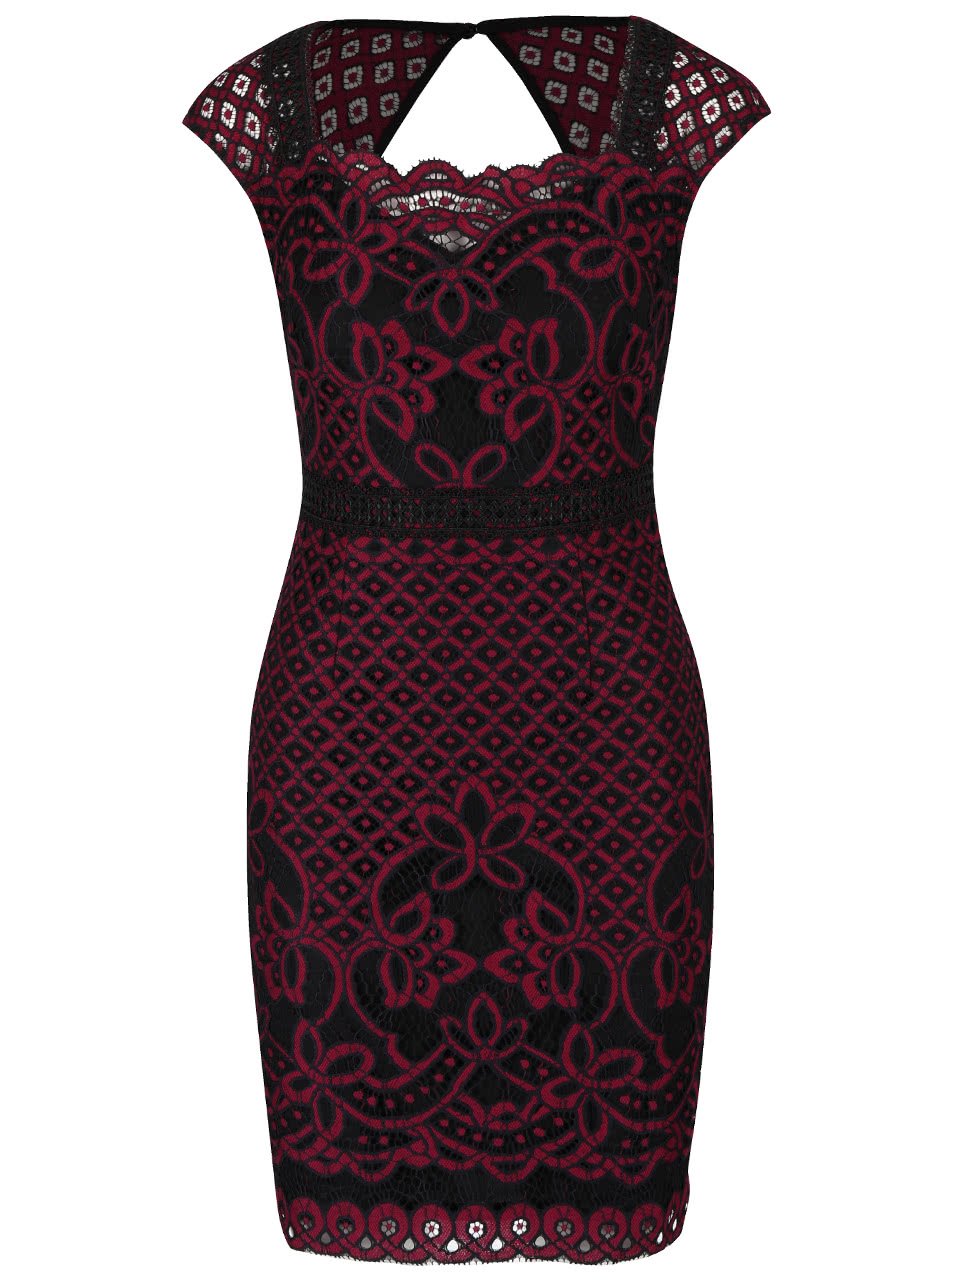 Černo-vínové šaty s krajkovými detaily Lipsy